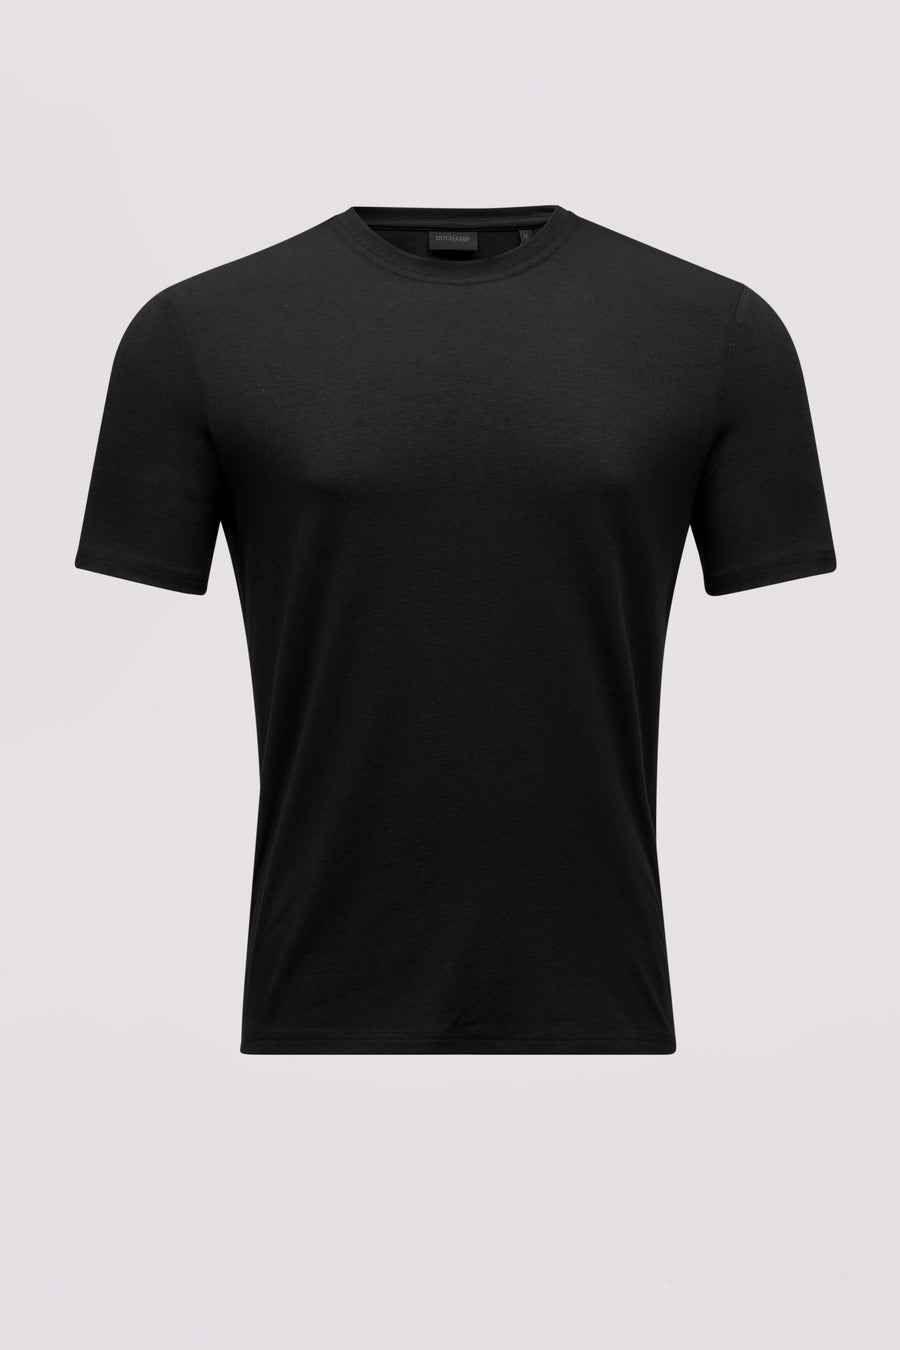 Lounge Wear T-Shirt Black